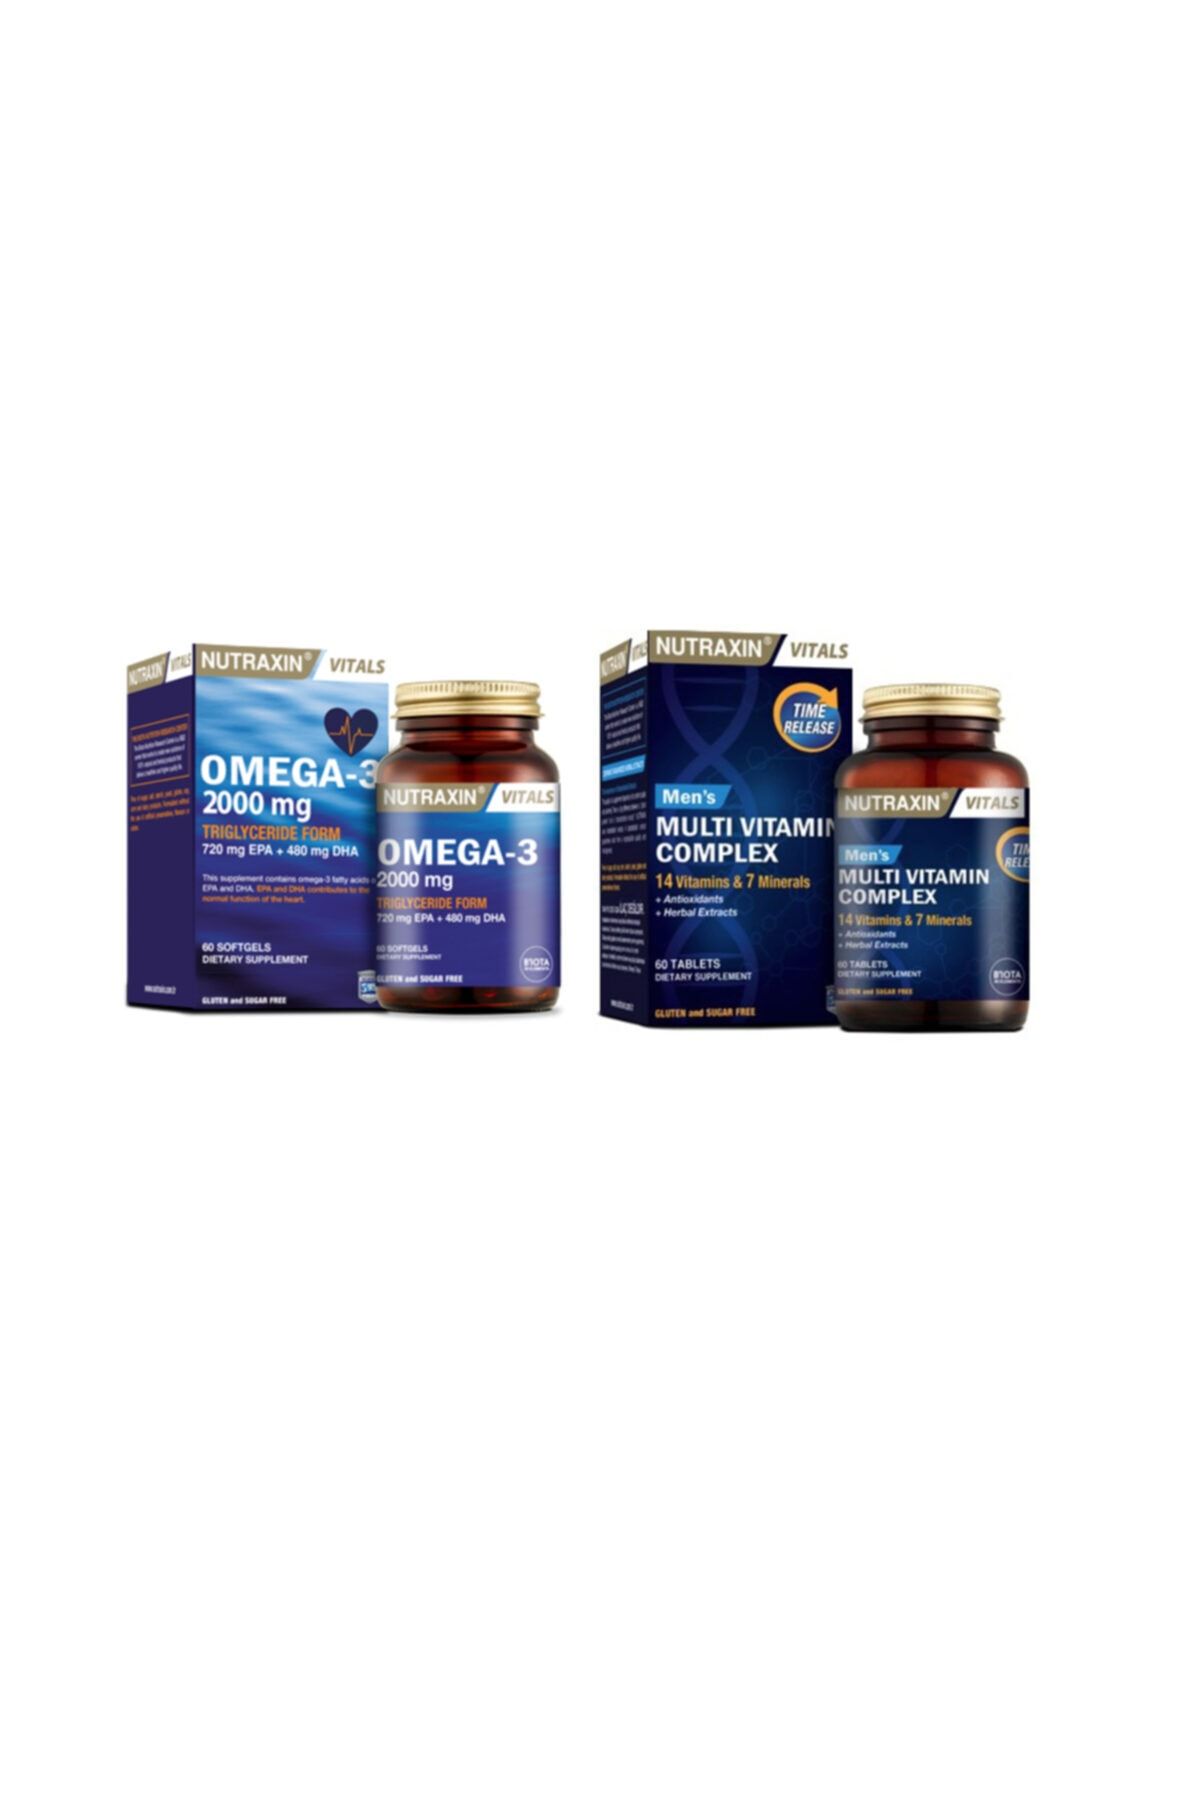 Nutraxin Omega 3 Balık Yağı 2000 mg 60 Kapsül+ 14 Vitamin,7 Mineral Içerikli Multivitamin Erkek 60 Tablet